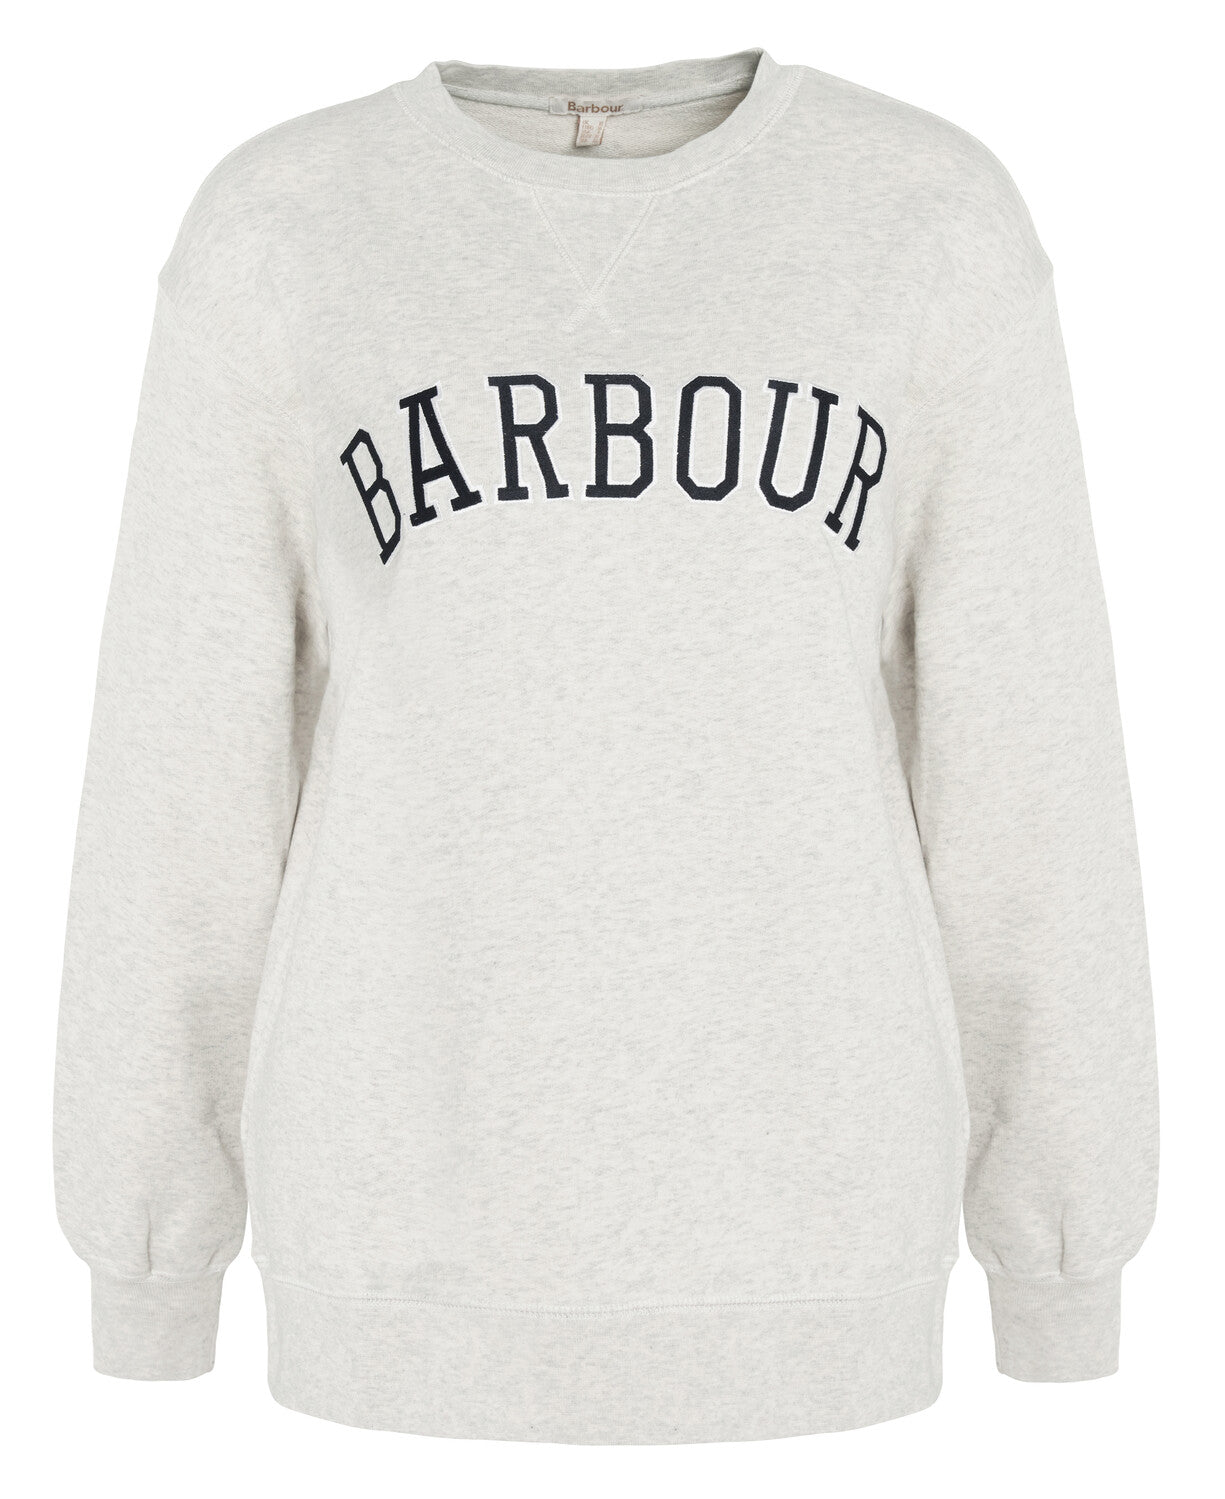 Barbour Northumberland Sweatshirt - Cloud/Navy